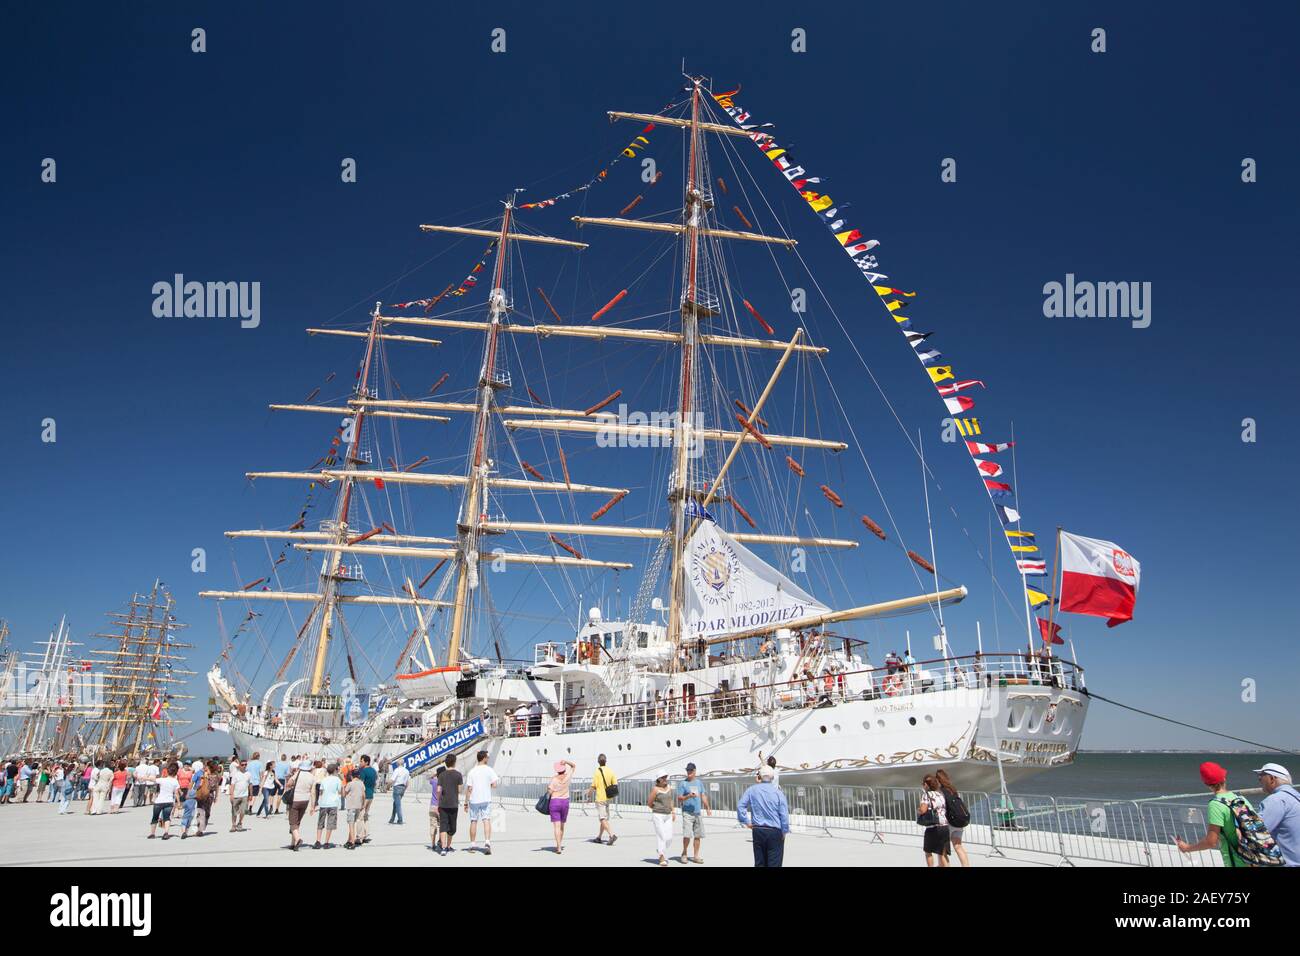 Polish full rigged training ship Dar Mlodziezy at Tall Ship Festival in Lisbon, Portugal. Stock Photo